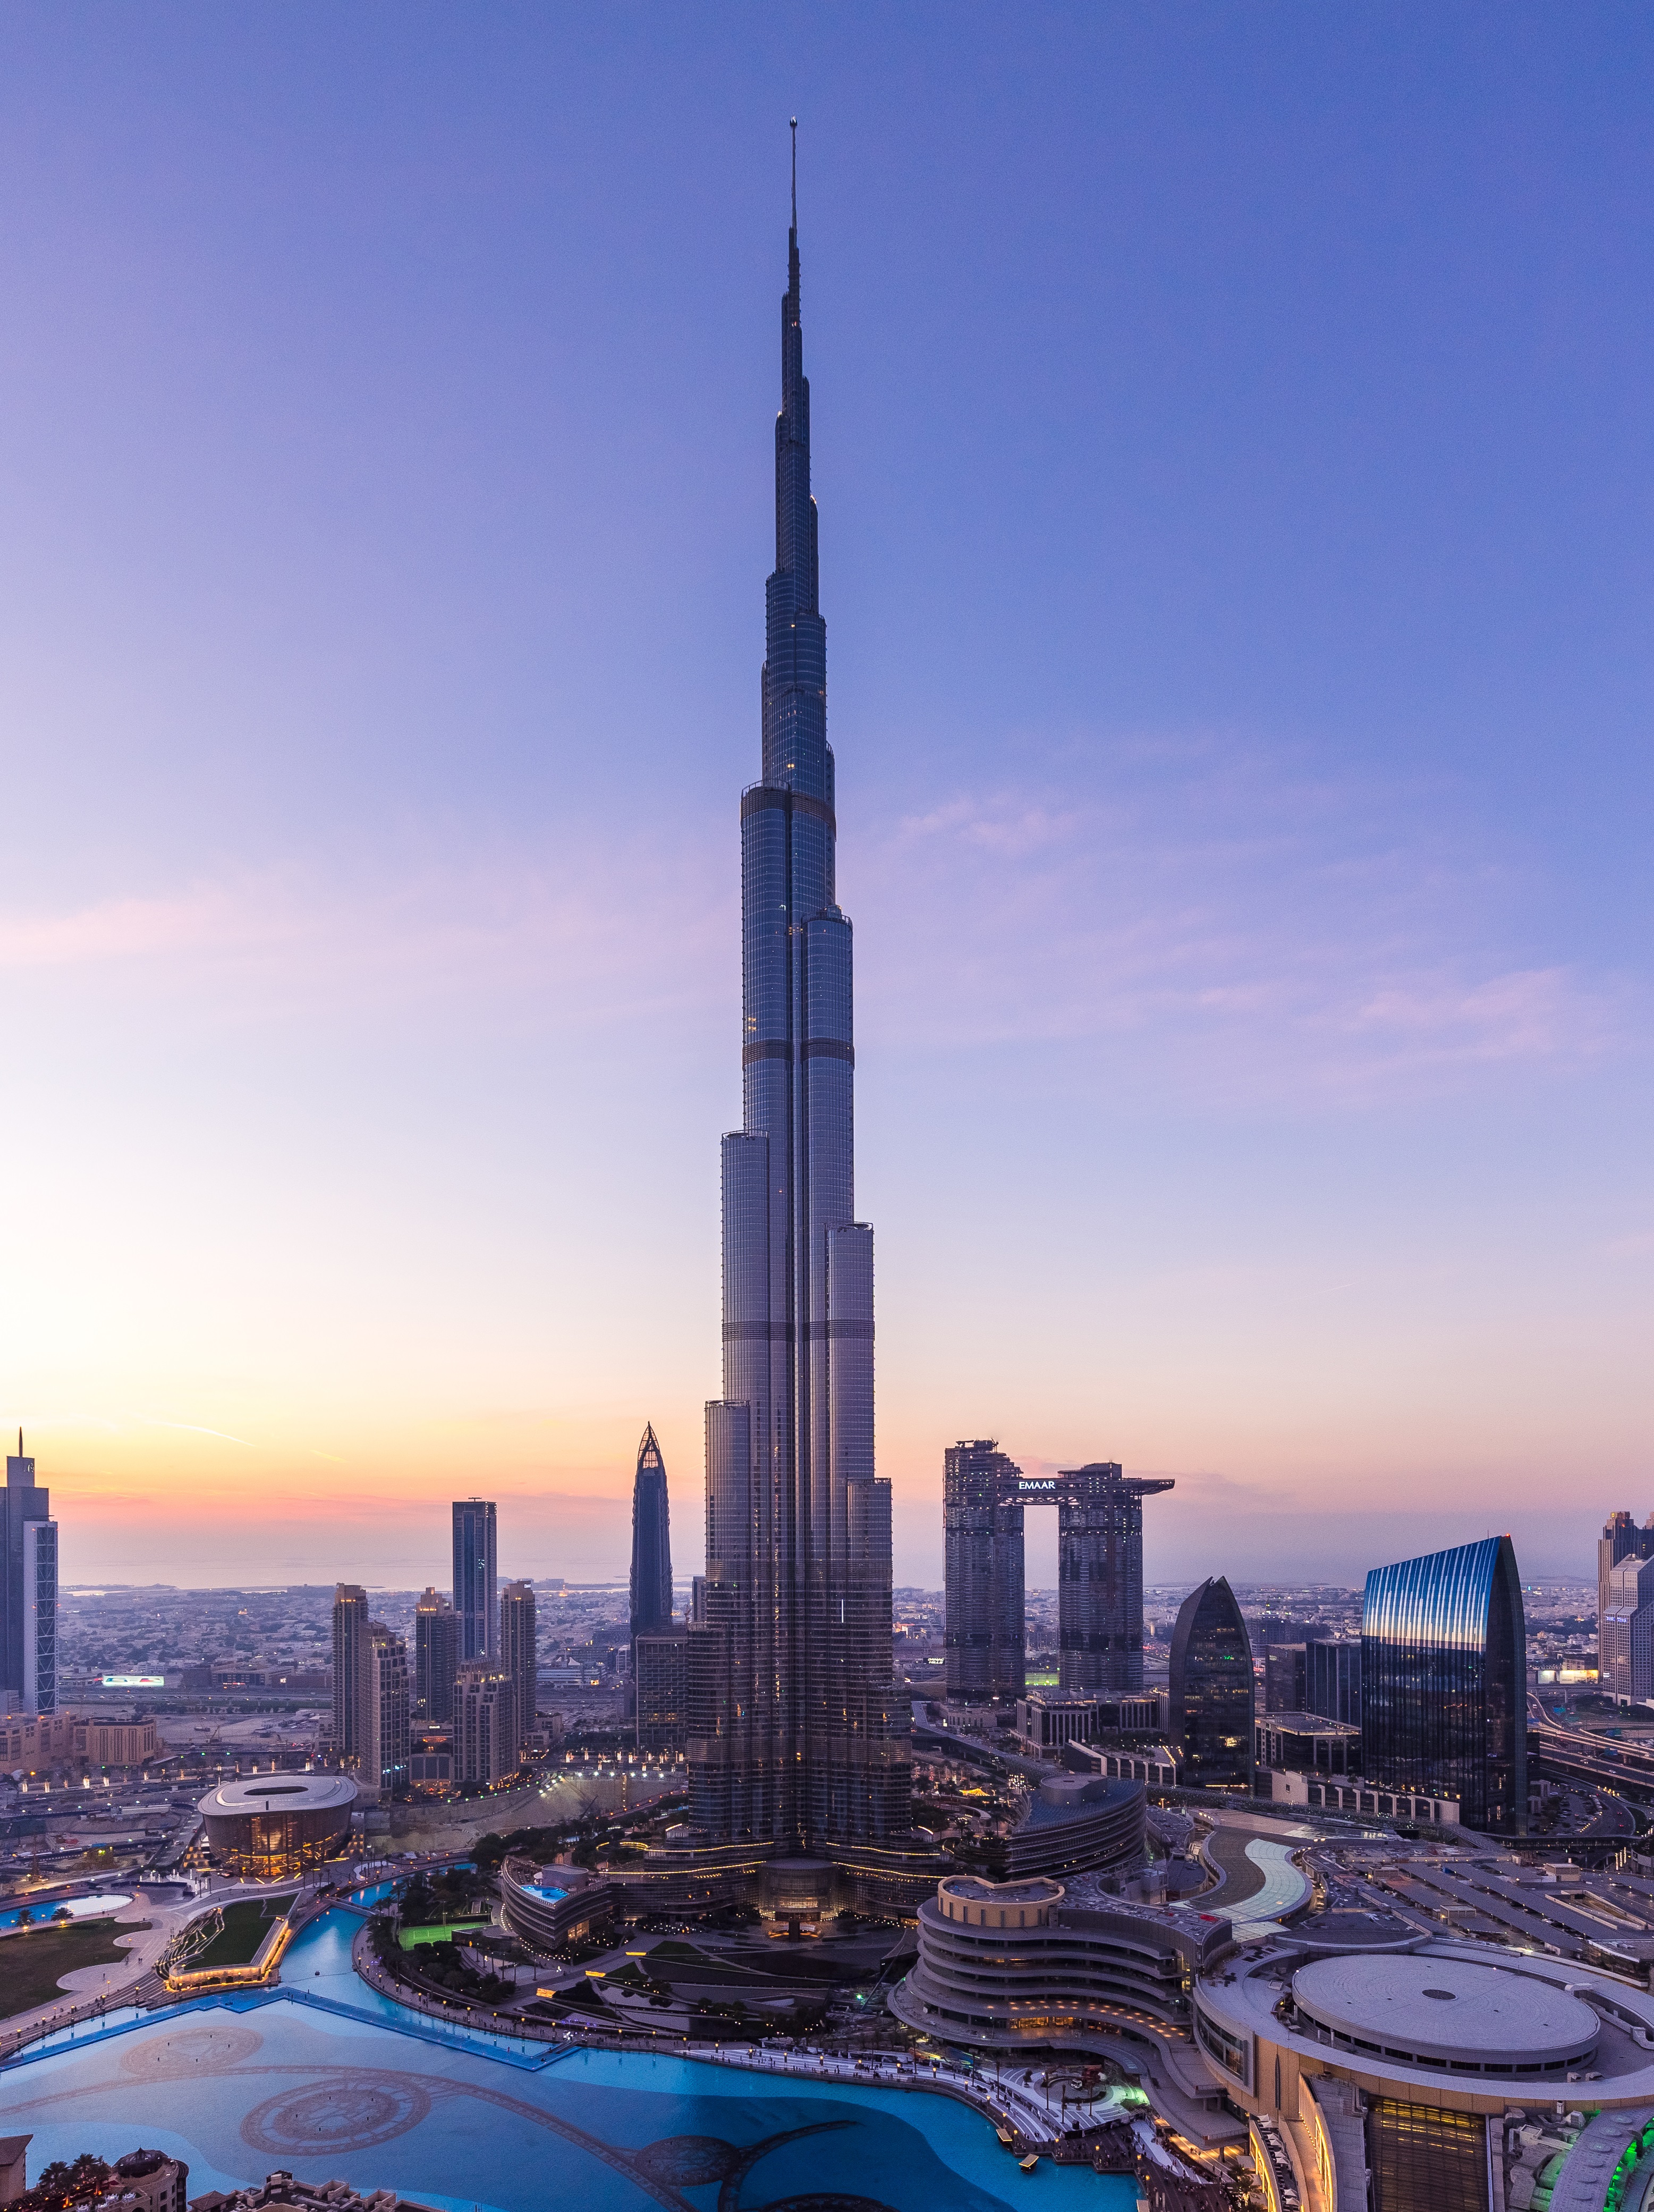 Burj Khalifa named among world’s most visited attractions According to Uber Data- Arabisk London Magazine